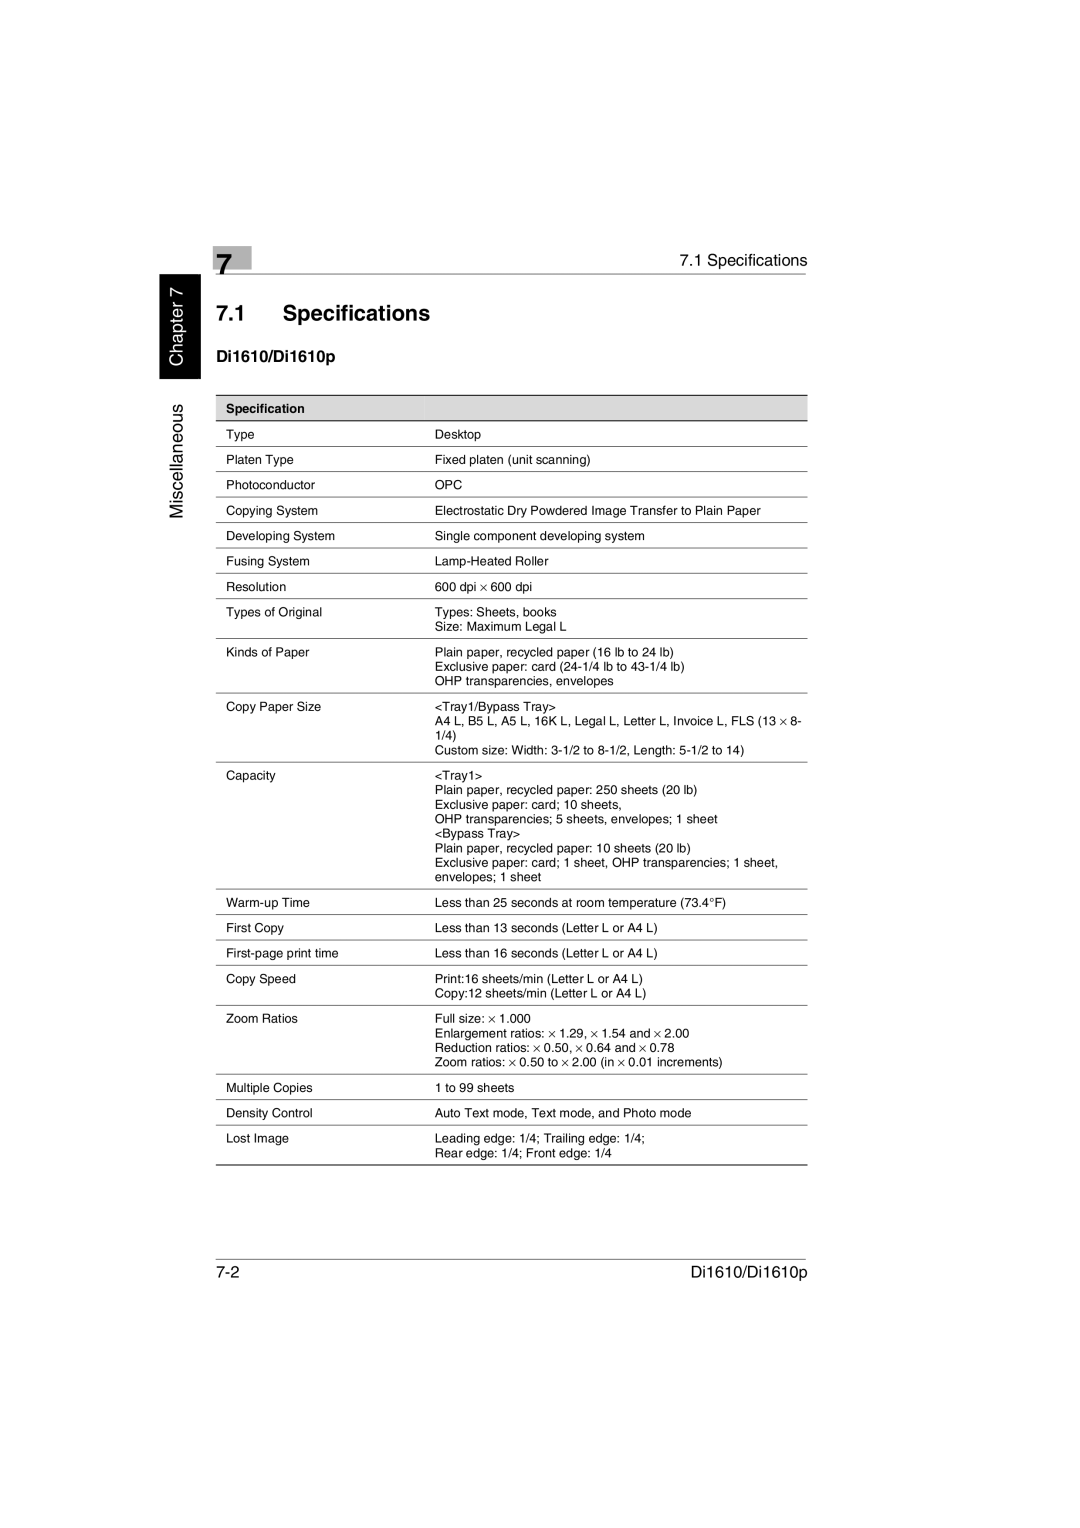 Konica Minolta Di1610p user manual Specifications 